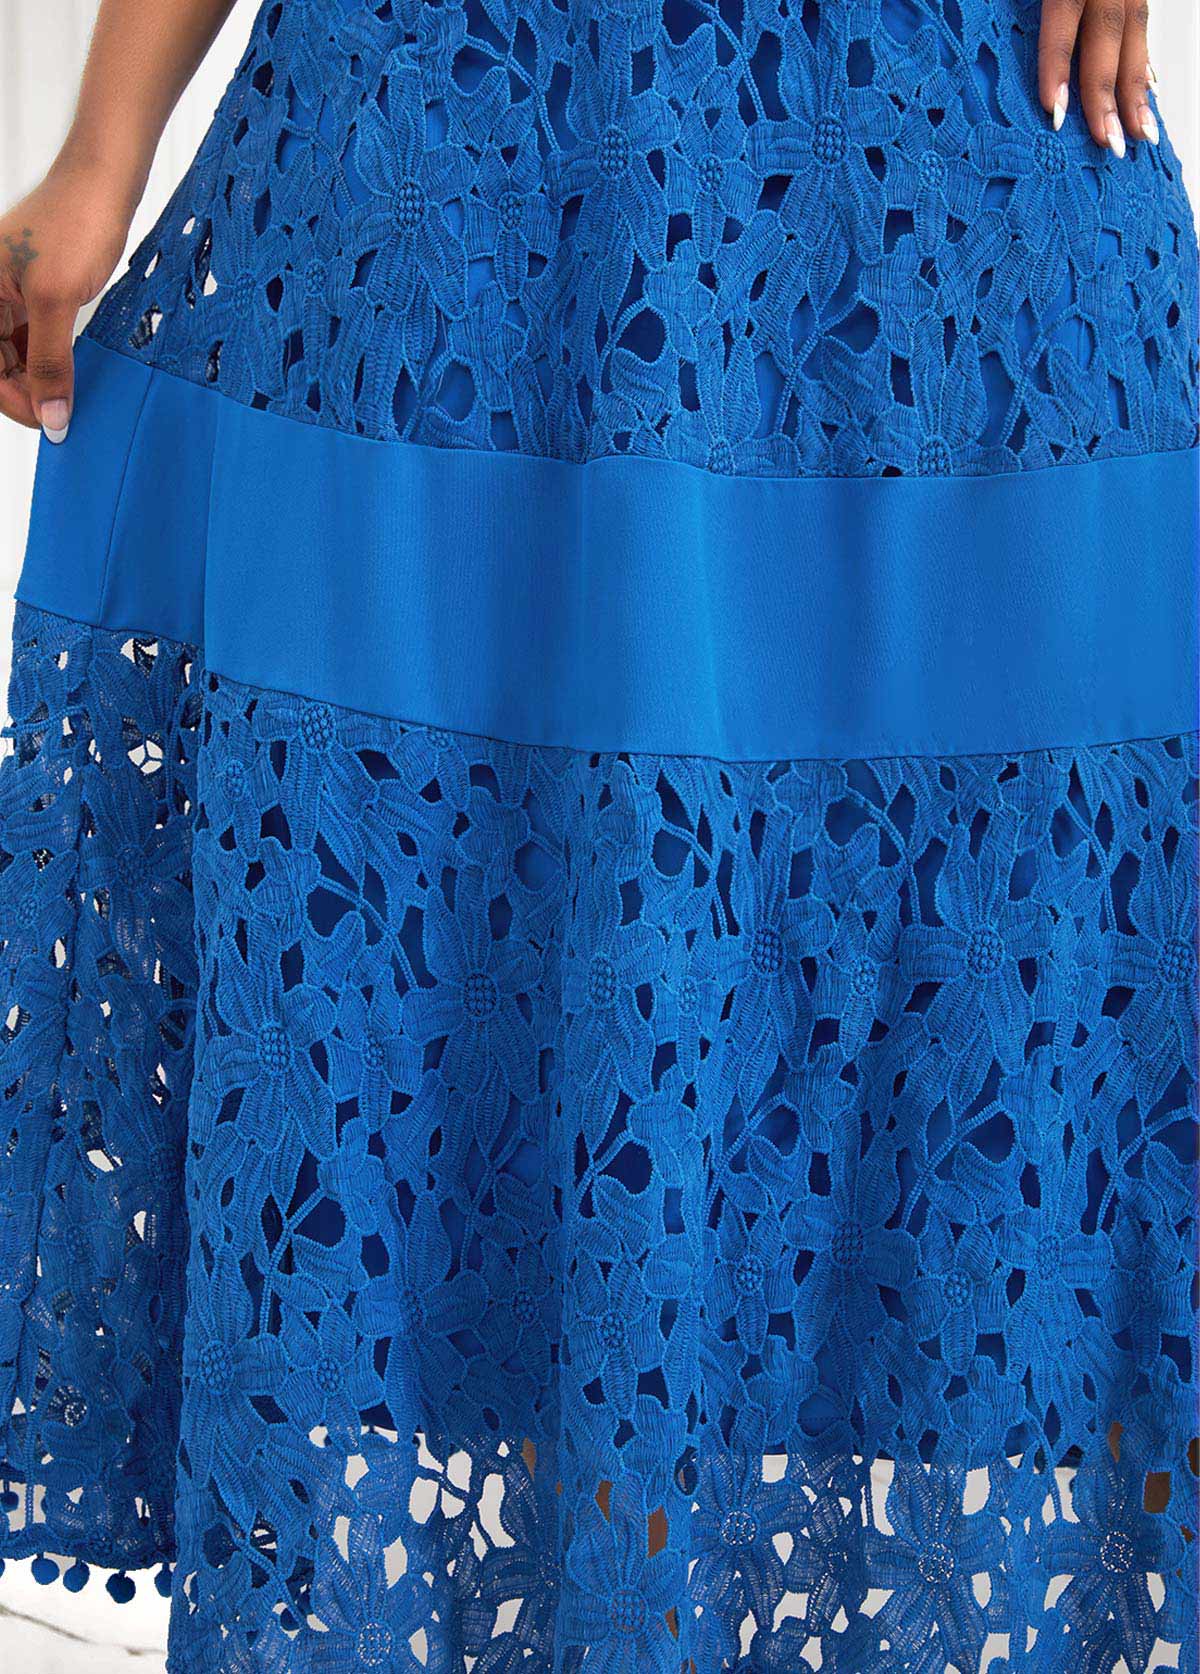 Patchwork Lace Blue A Line V Neck Dress